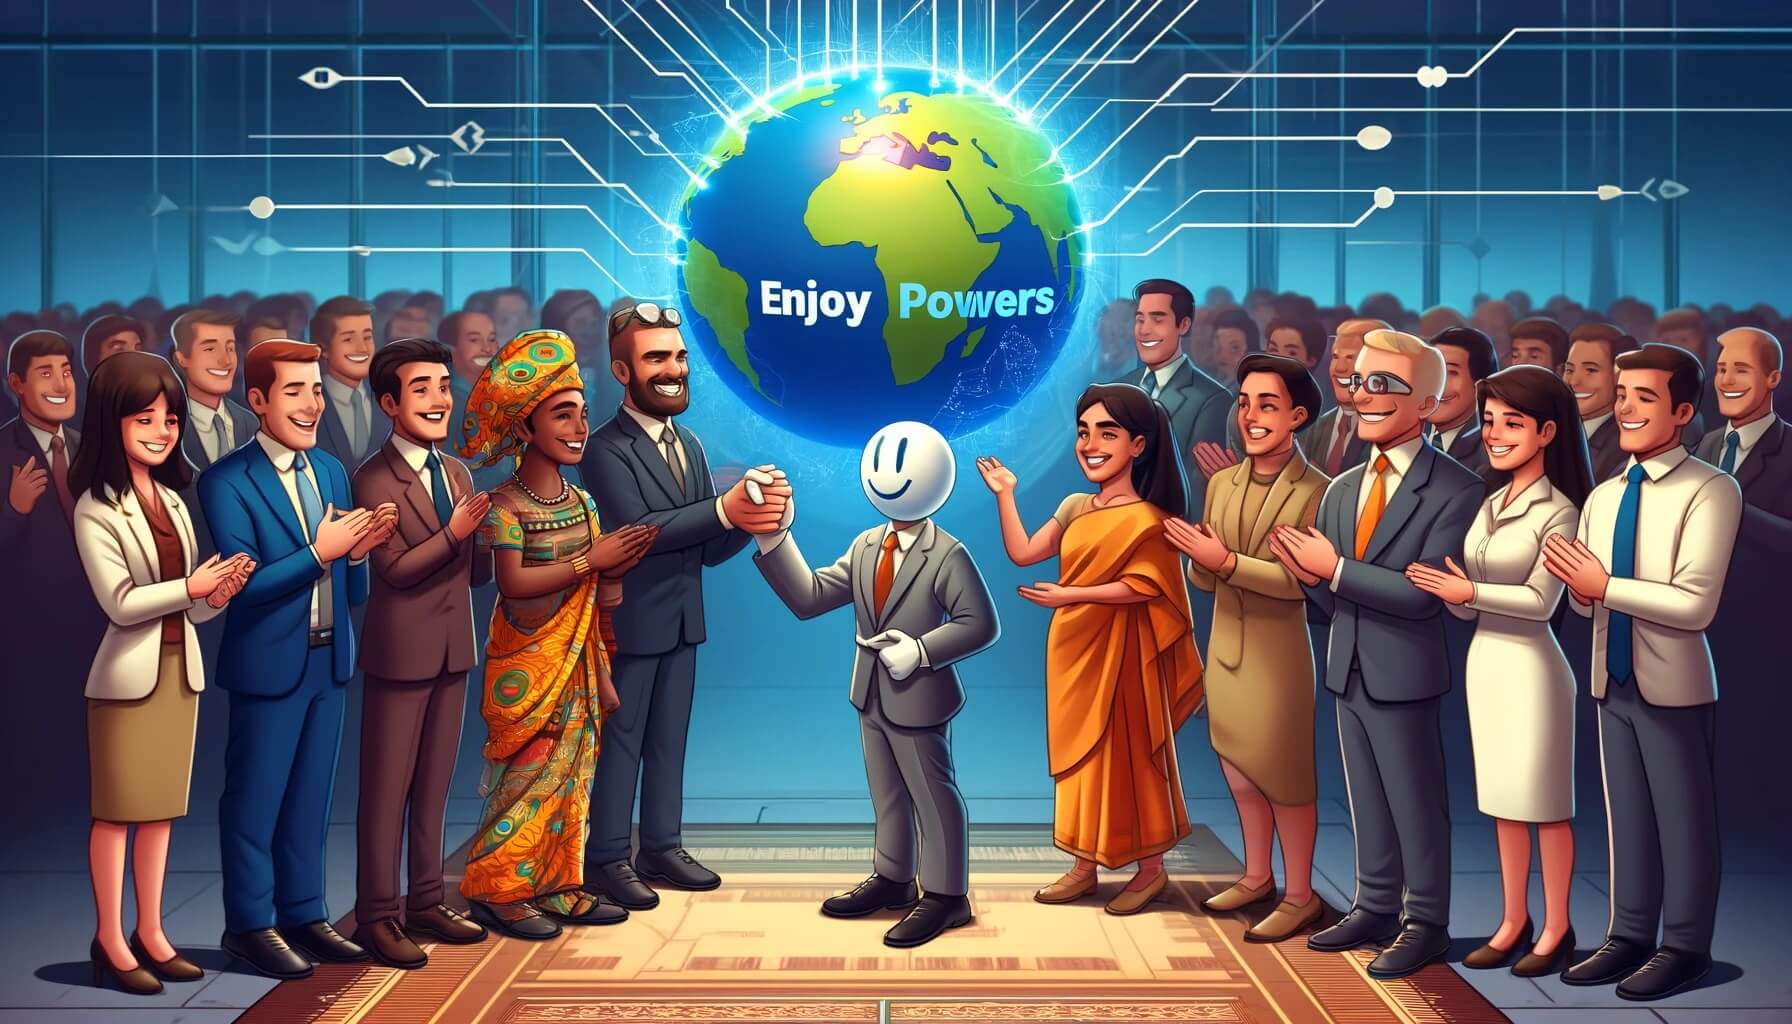 Enjoypowers and global partner